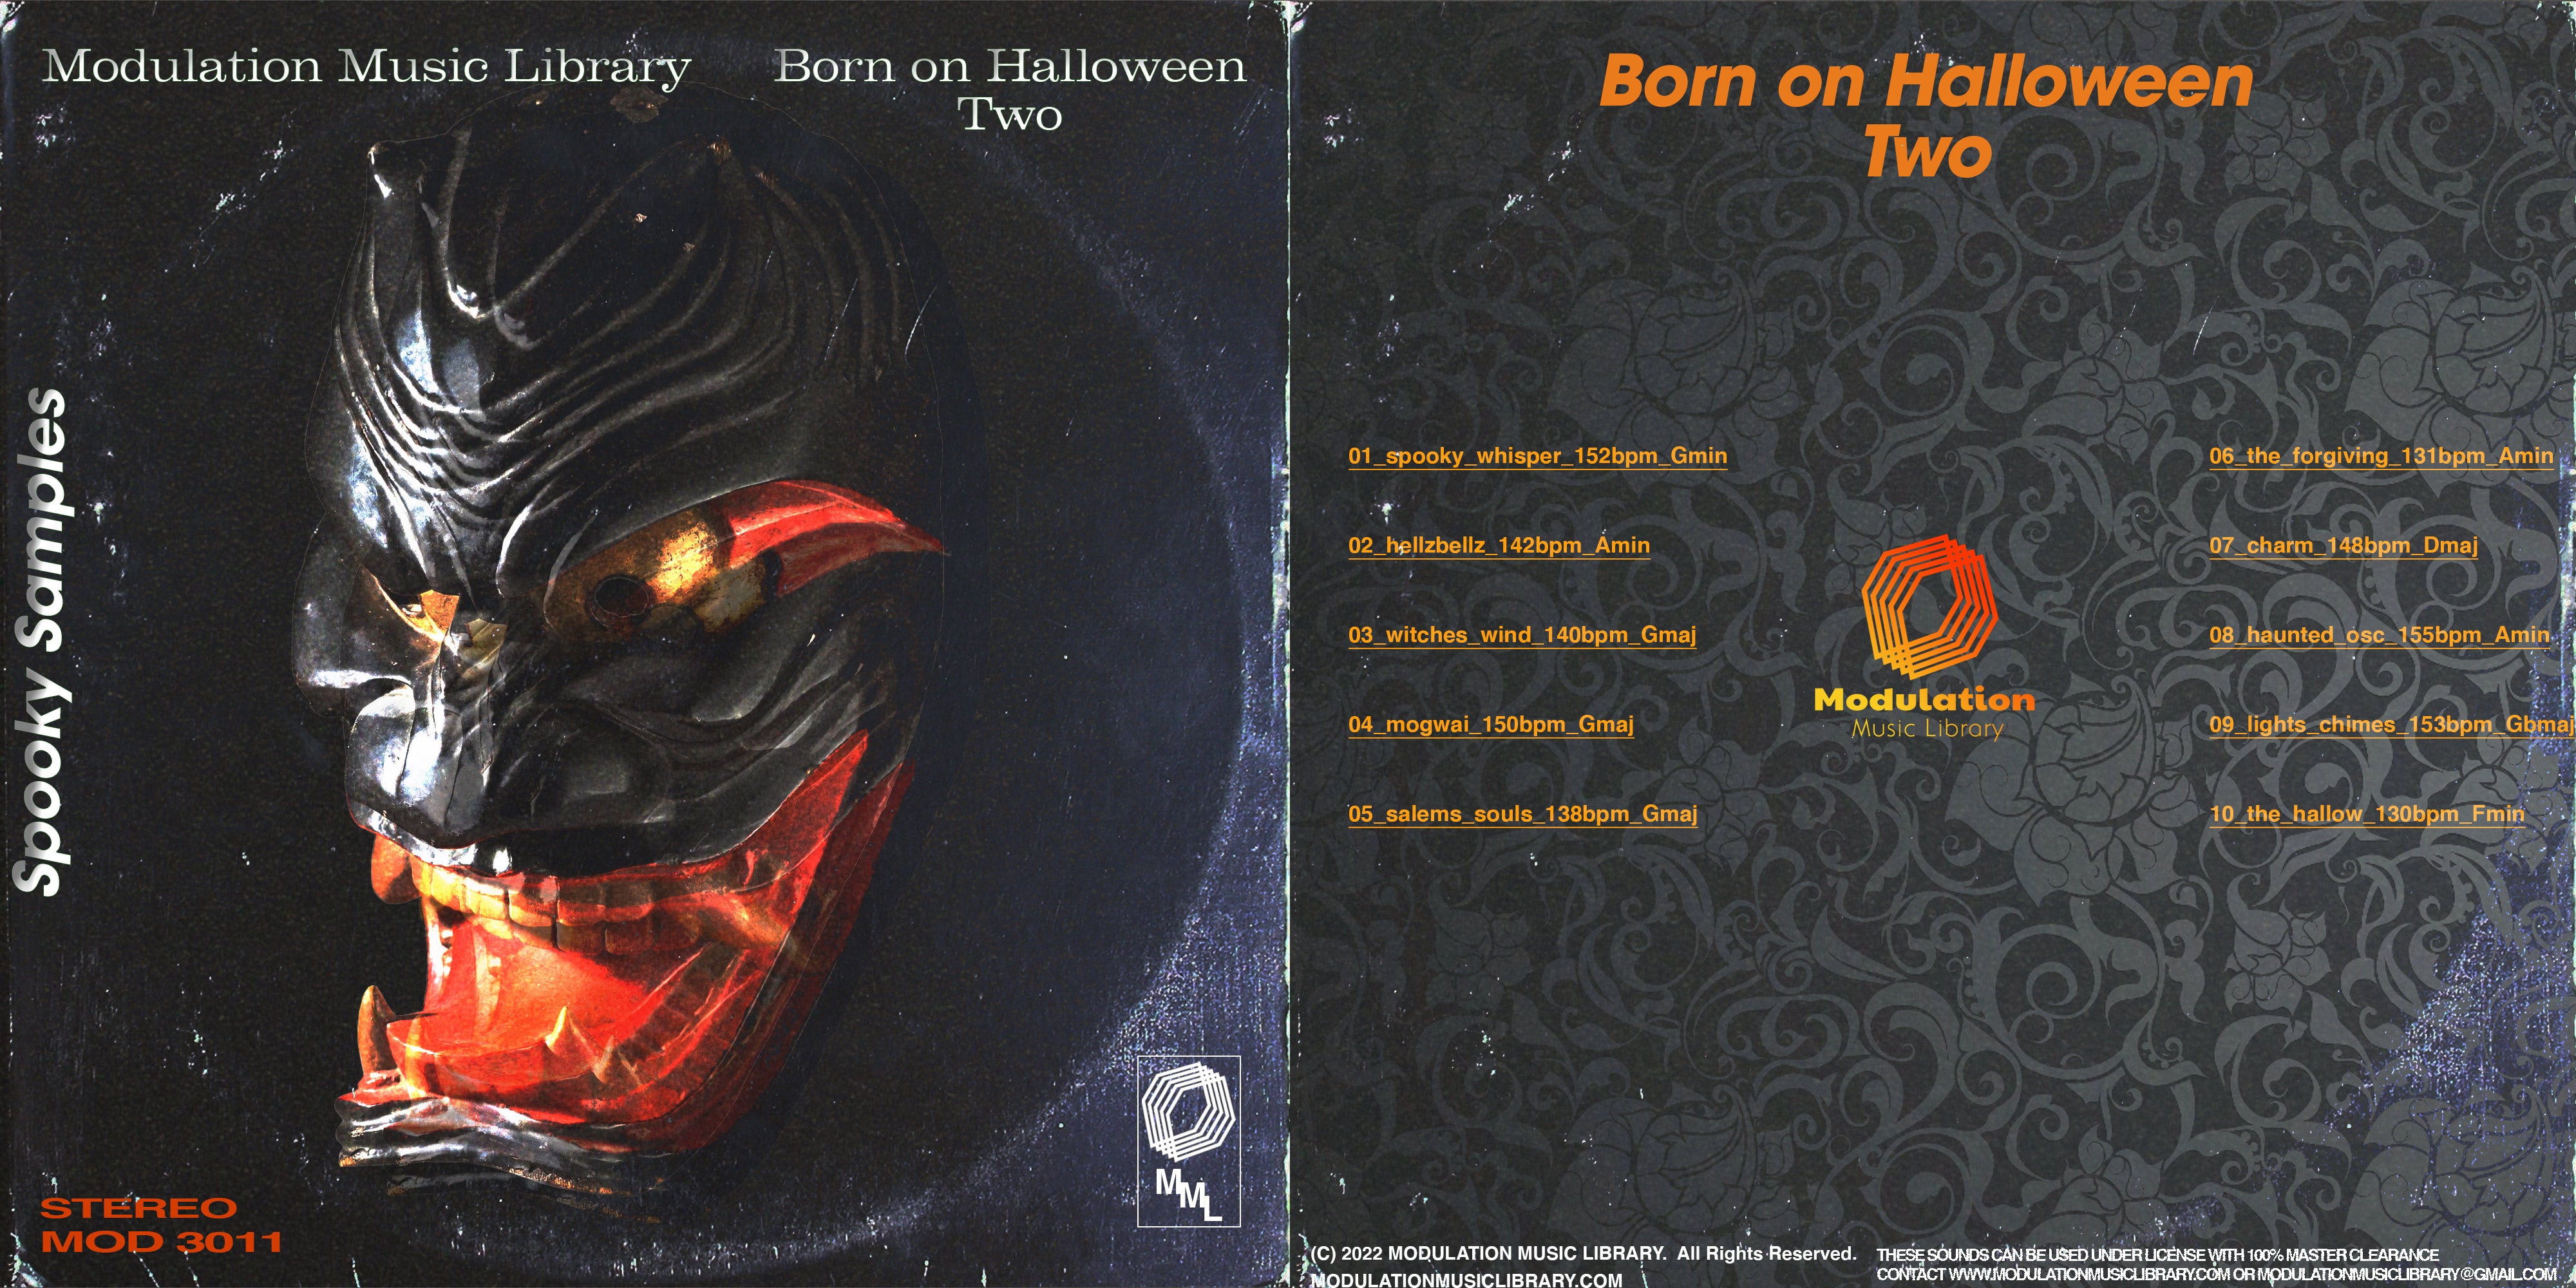 Born on Halloween Two - MOD-3011